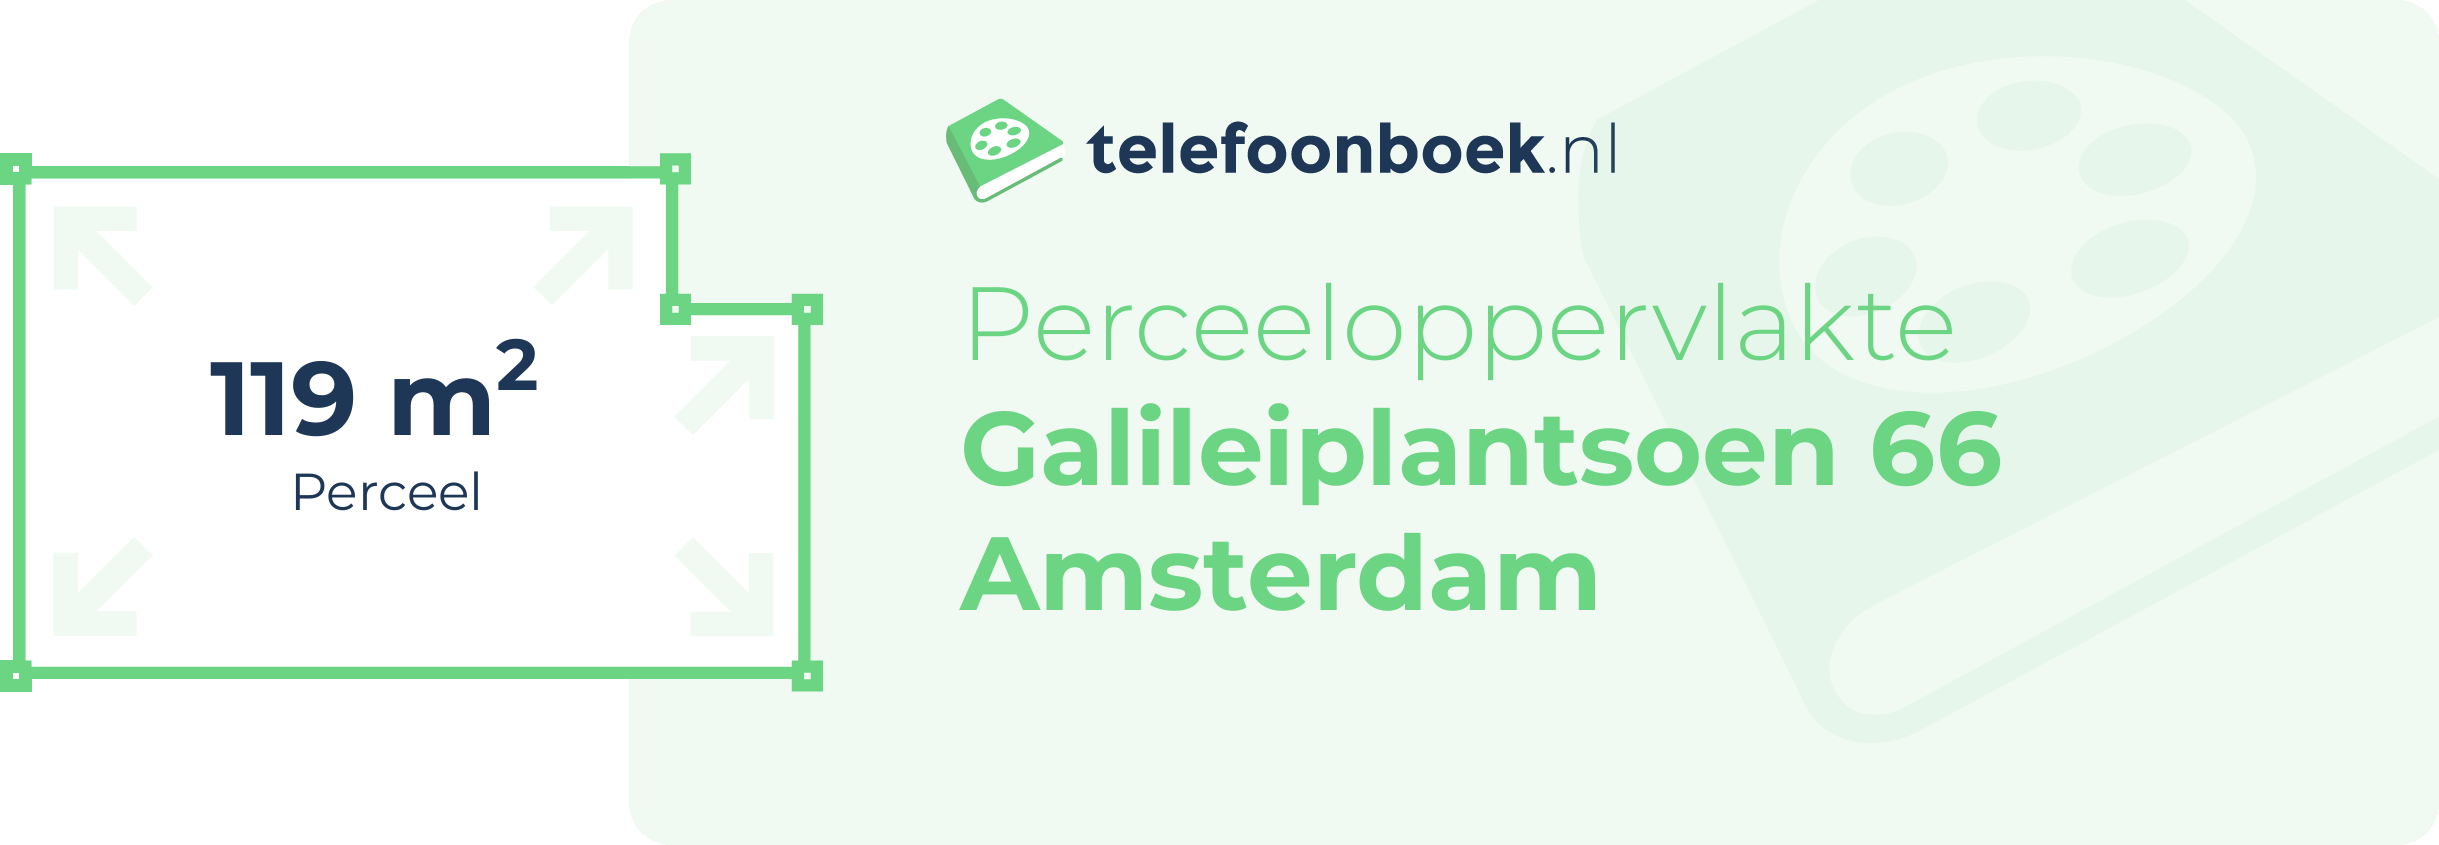 Perceeloppervlakte Galileiplantsoen 66 Amsterdam